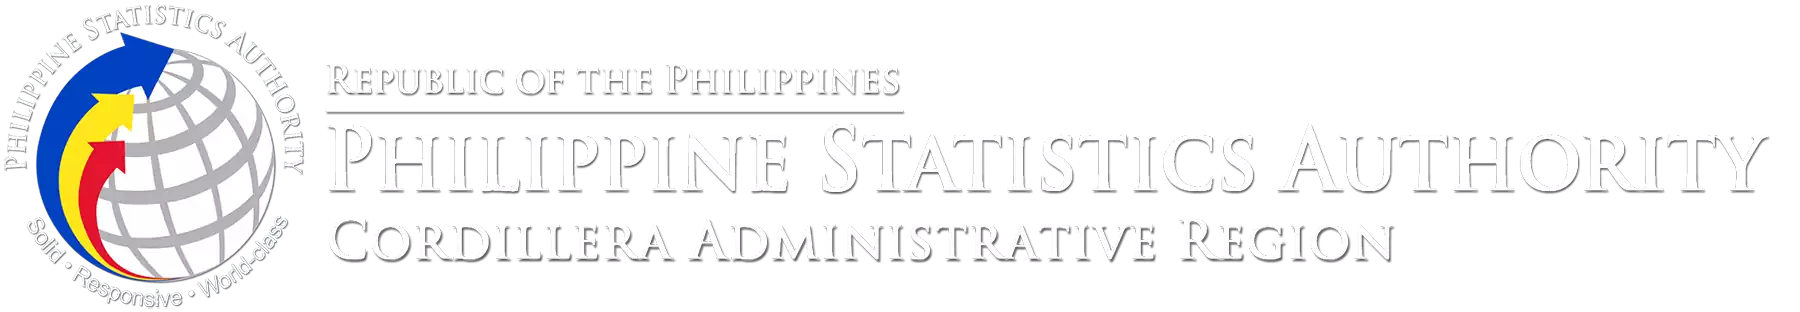 Philippine Statistics Authority-Cordillera Administrative Region